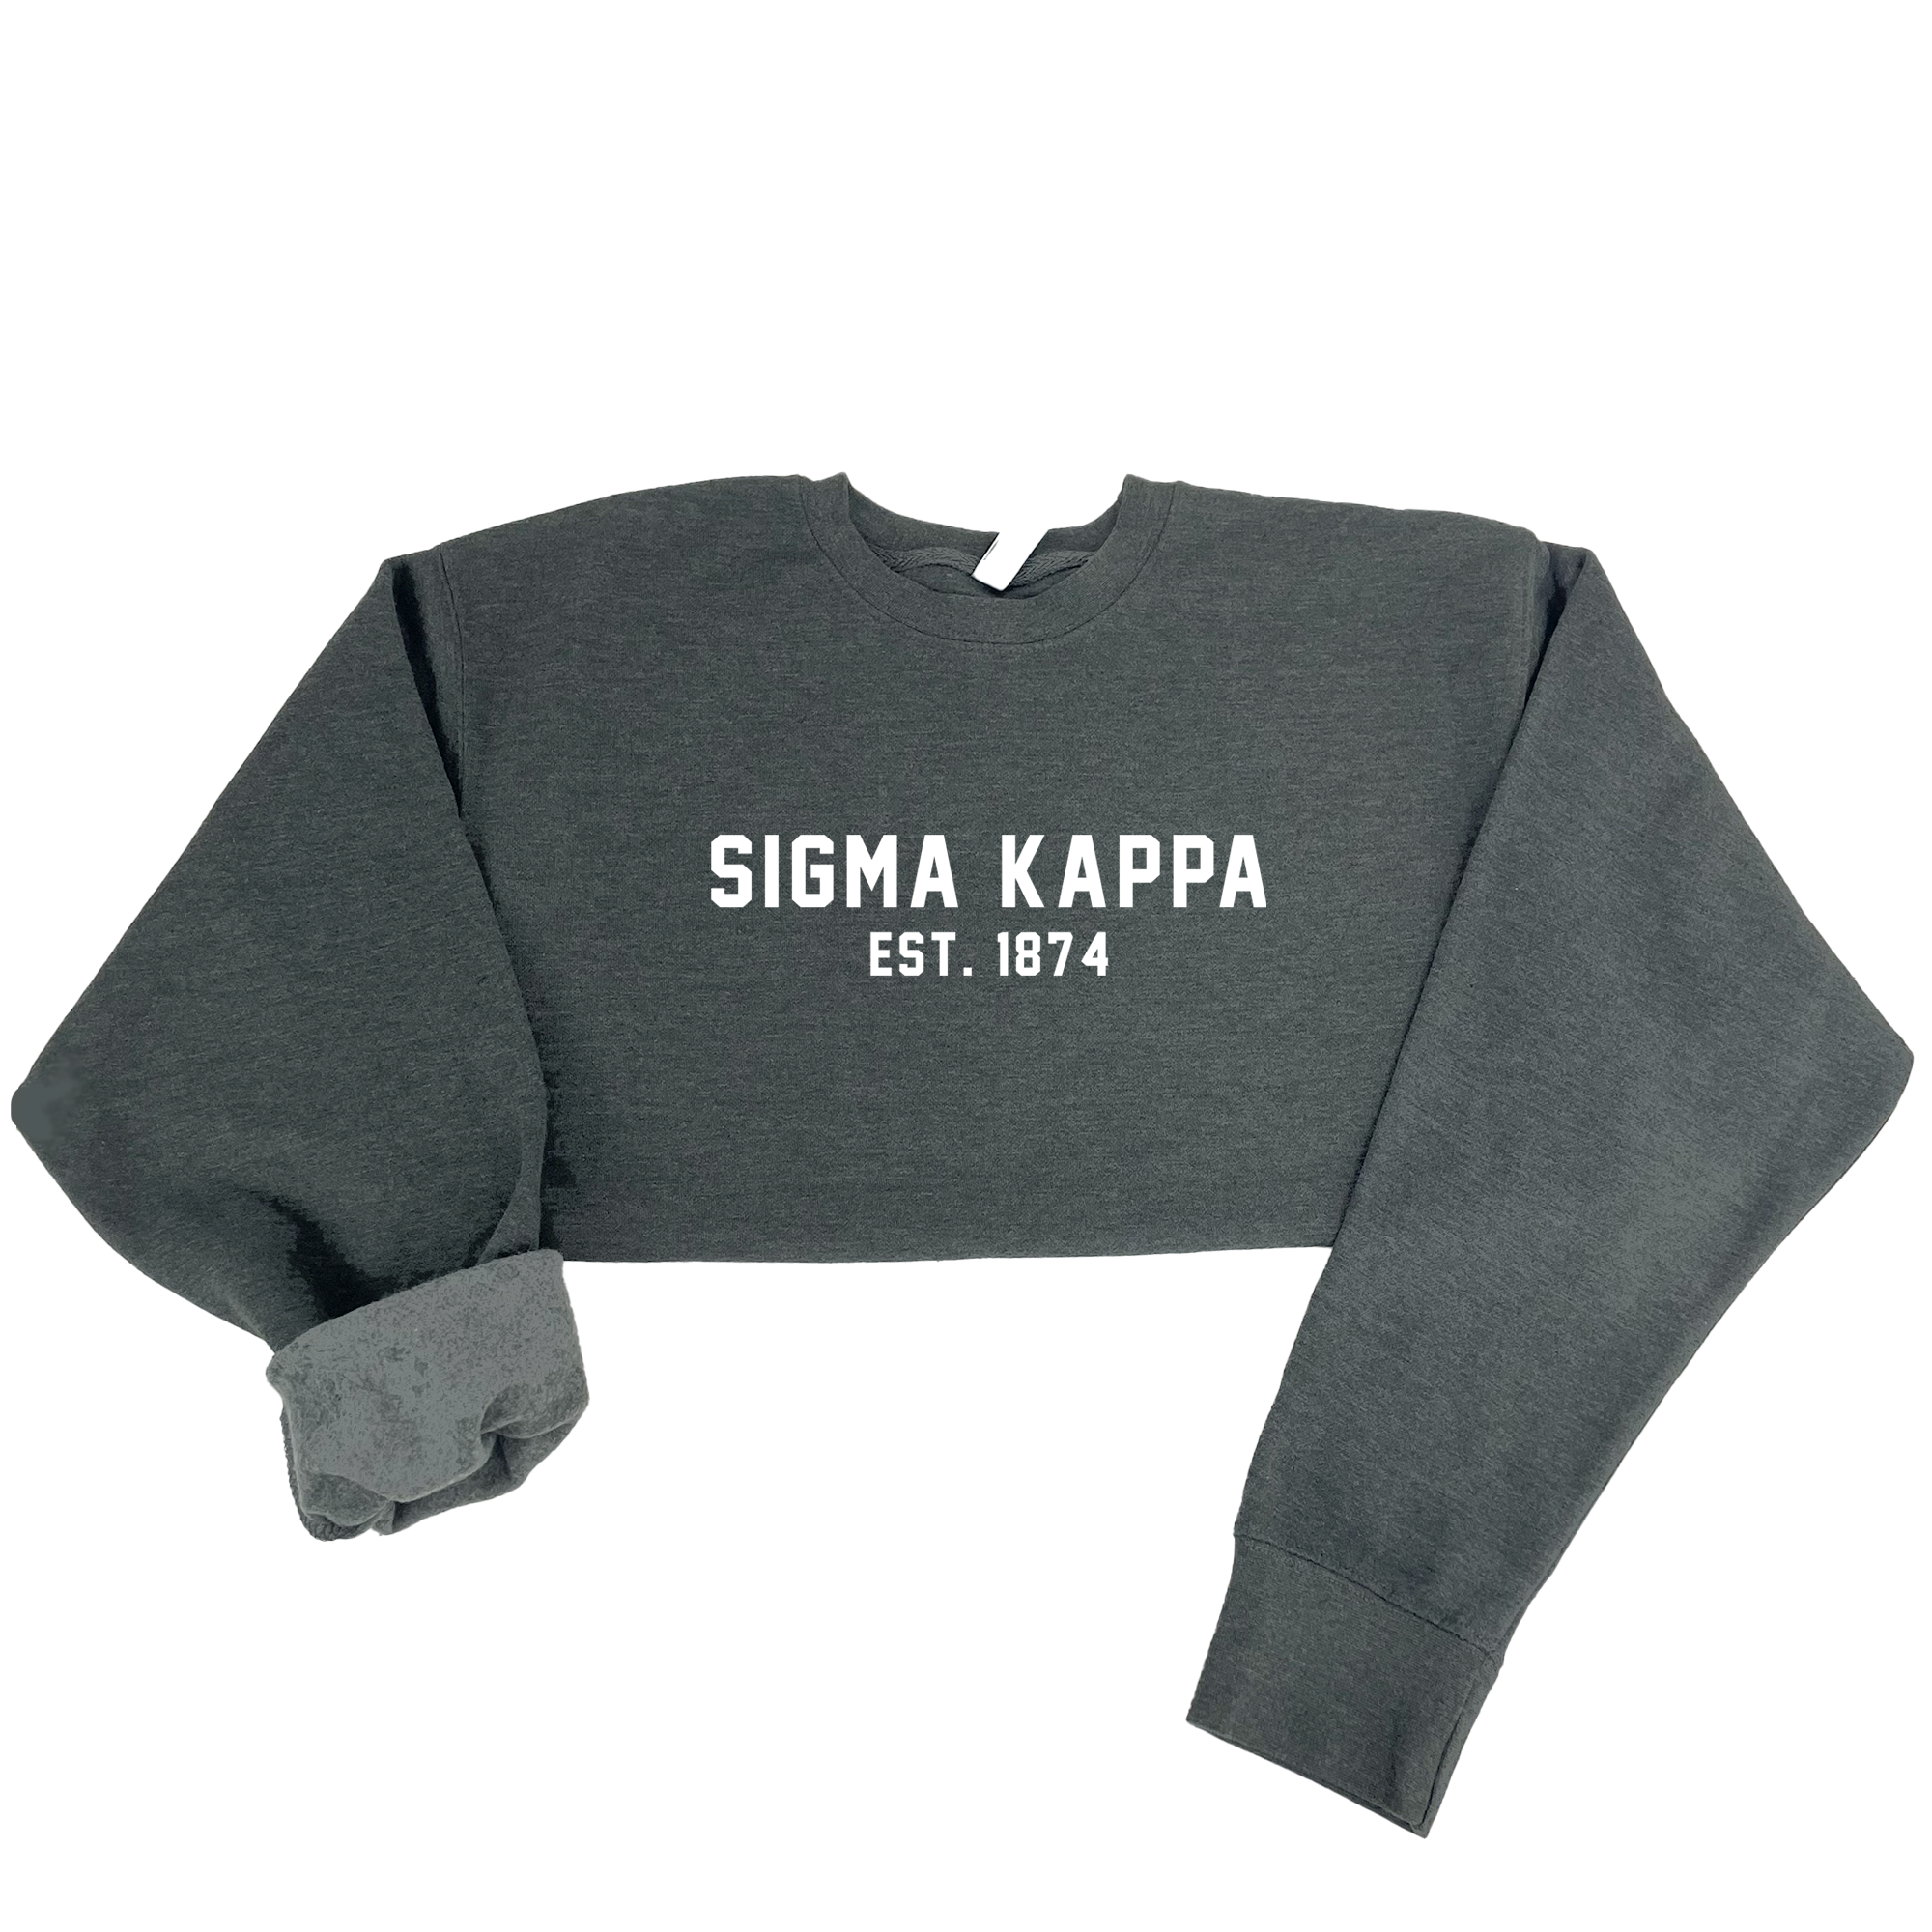 Sigma Kappa Est. 1874 Sweatshirt